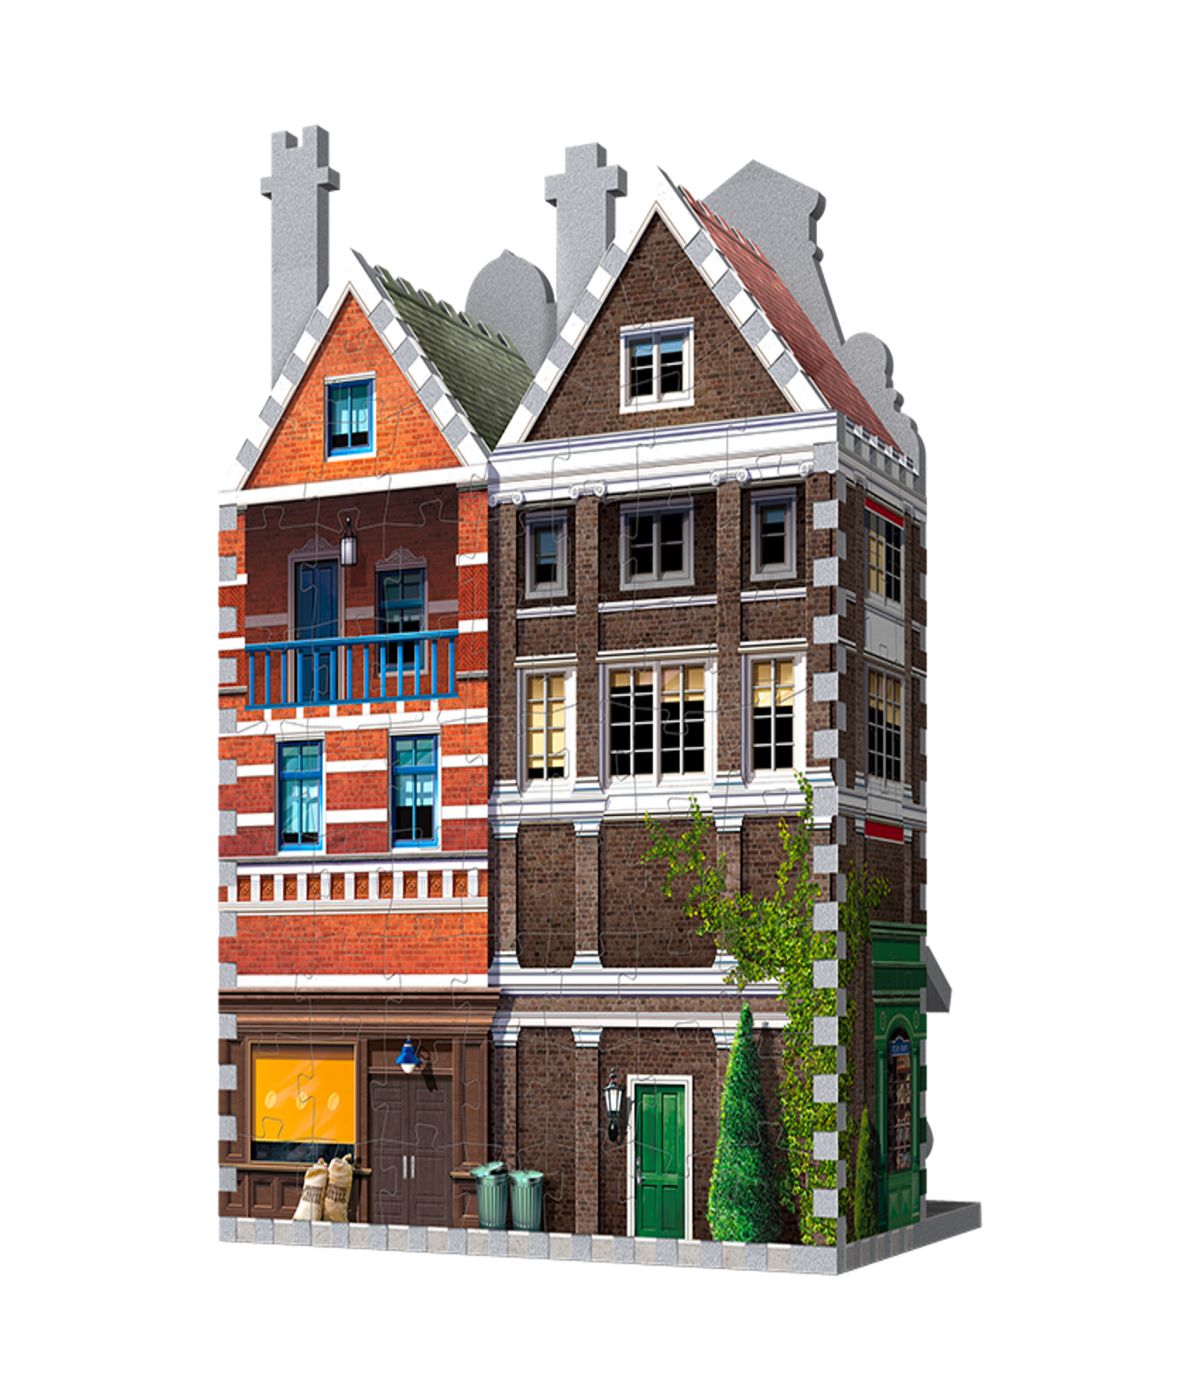 Urbania Collection - Cafe 3D Puzzle: 285 Pcs Multi